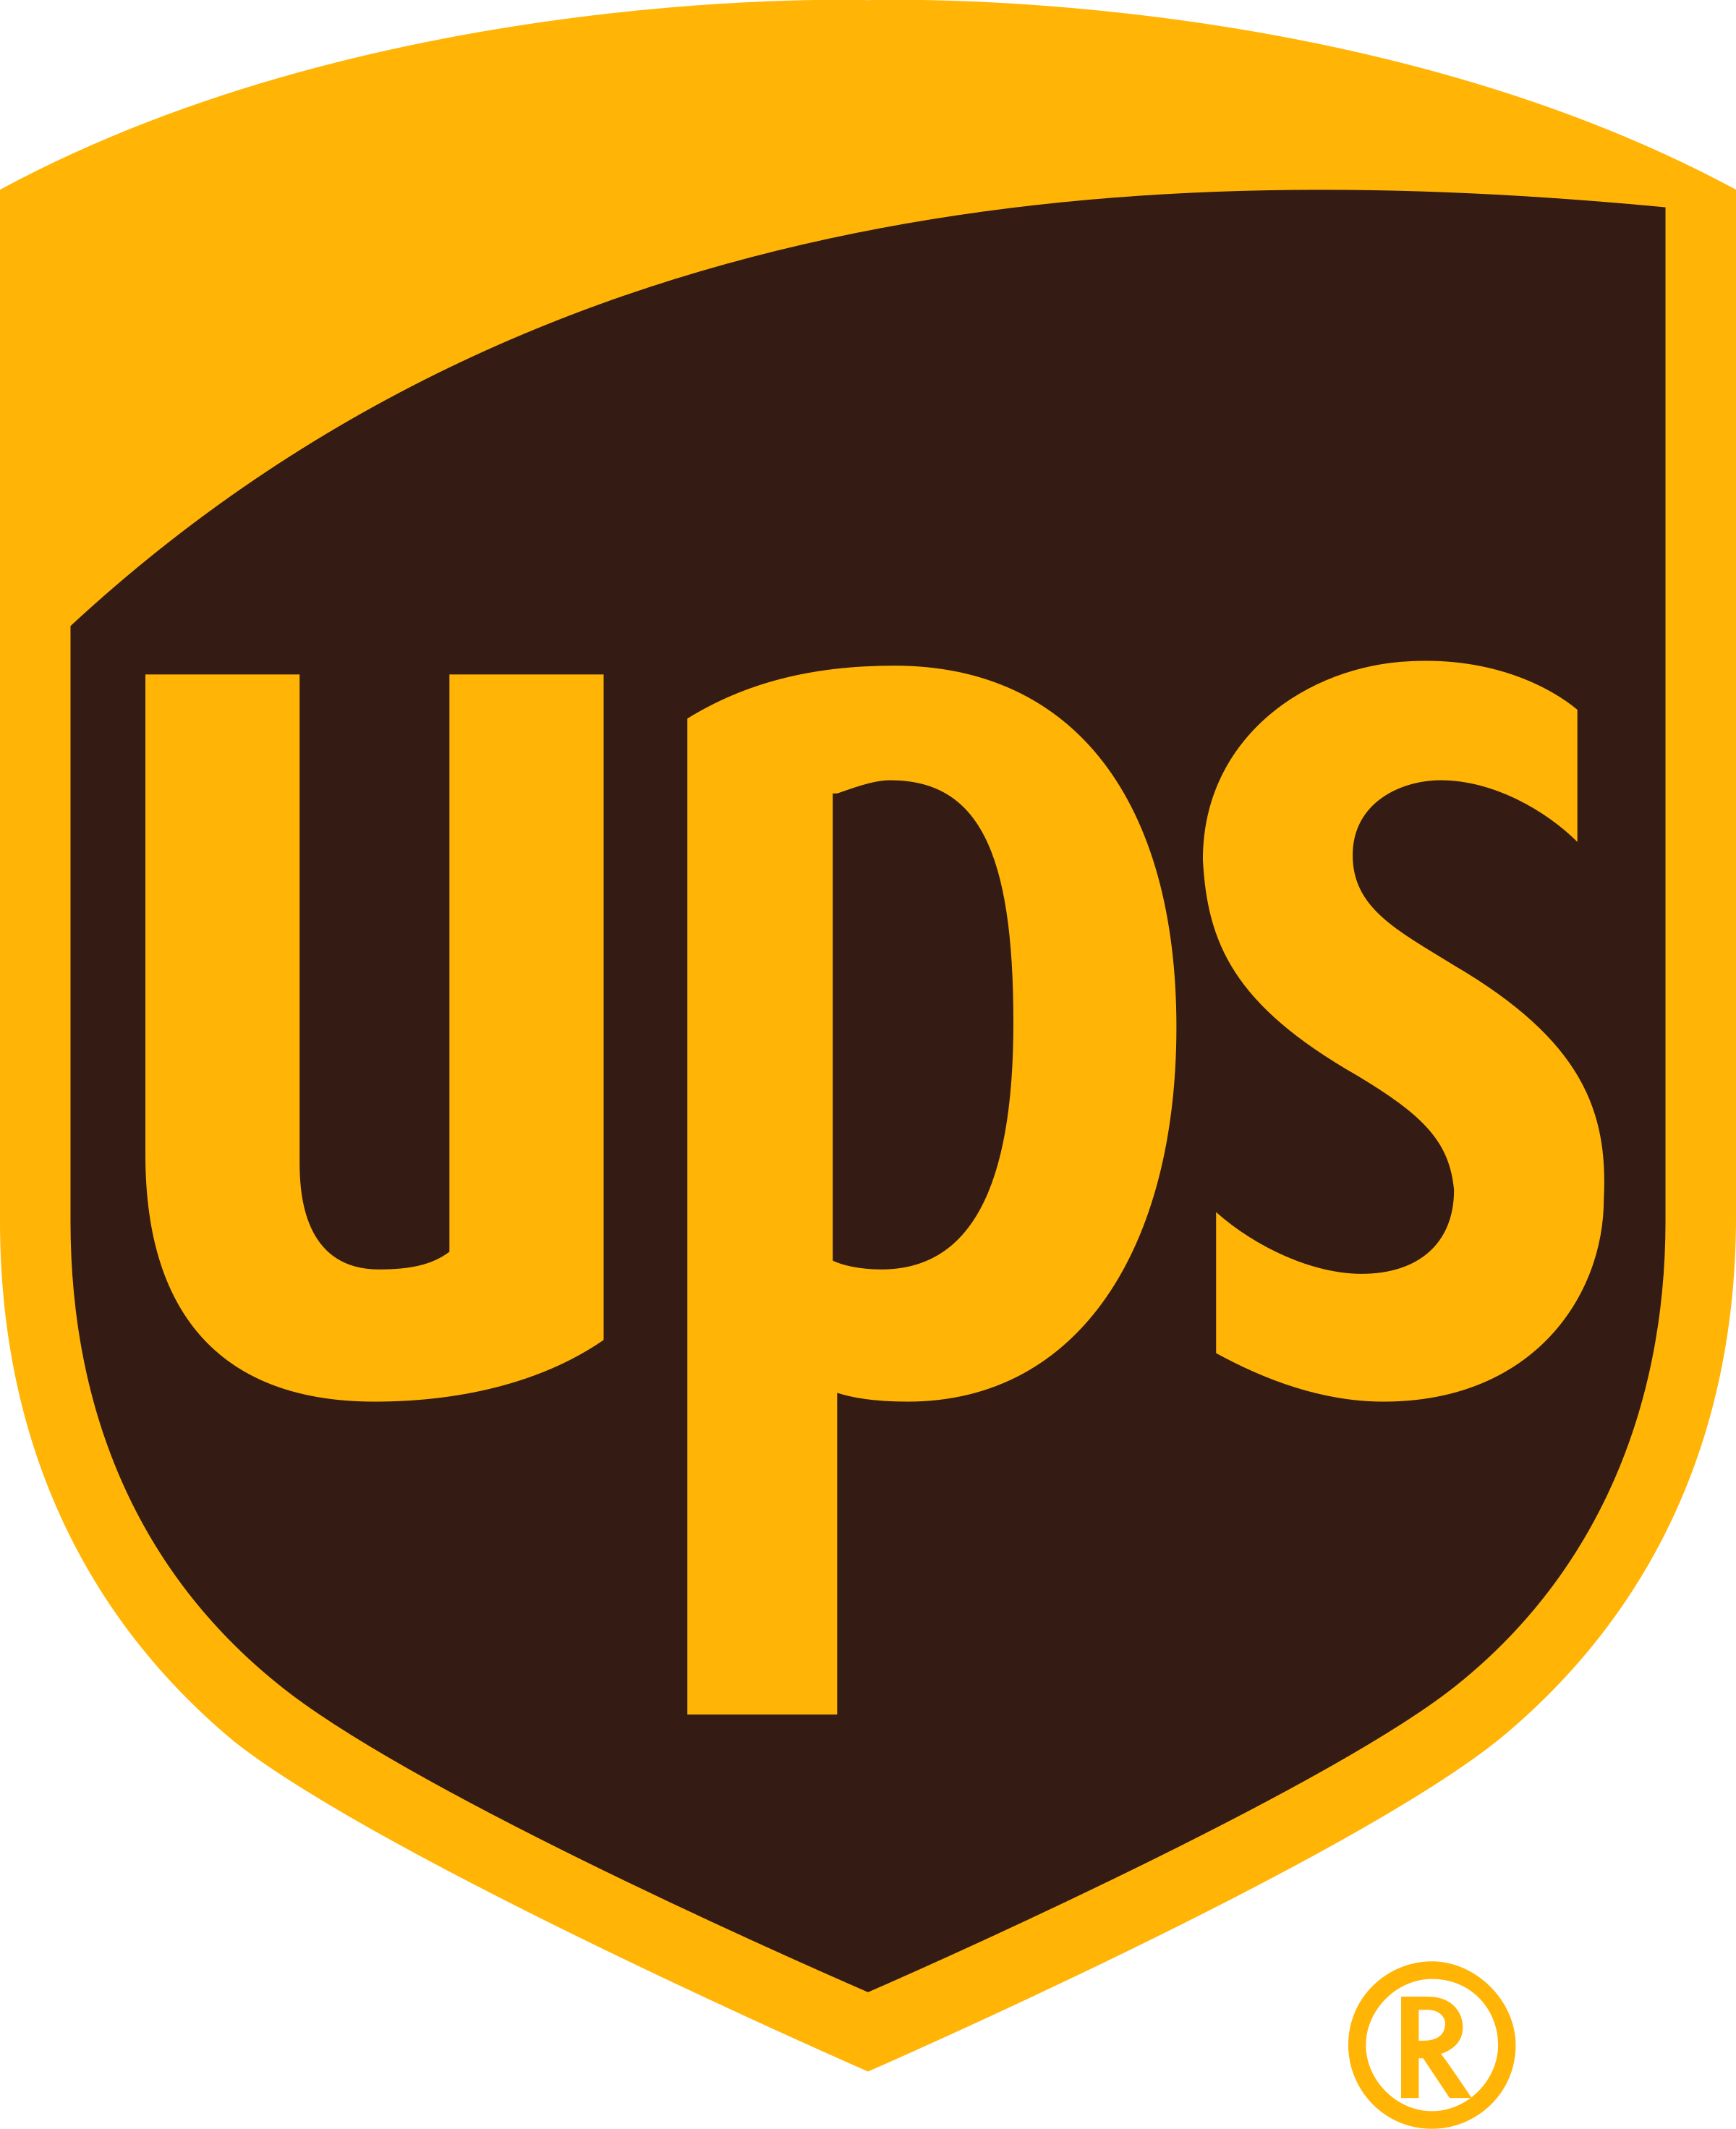 United States 营销公司 Altered State Productions 通过 SEO 和数字营销帮助了 UPS 发展业务